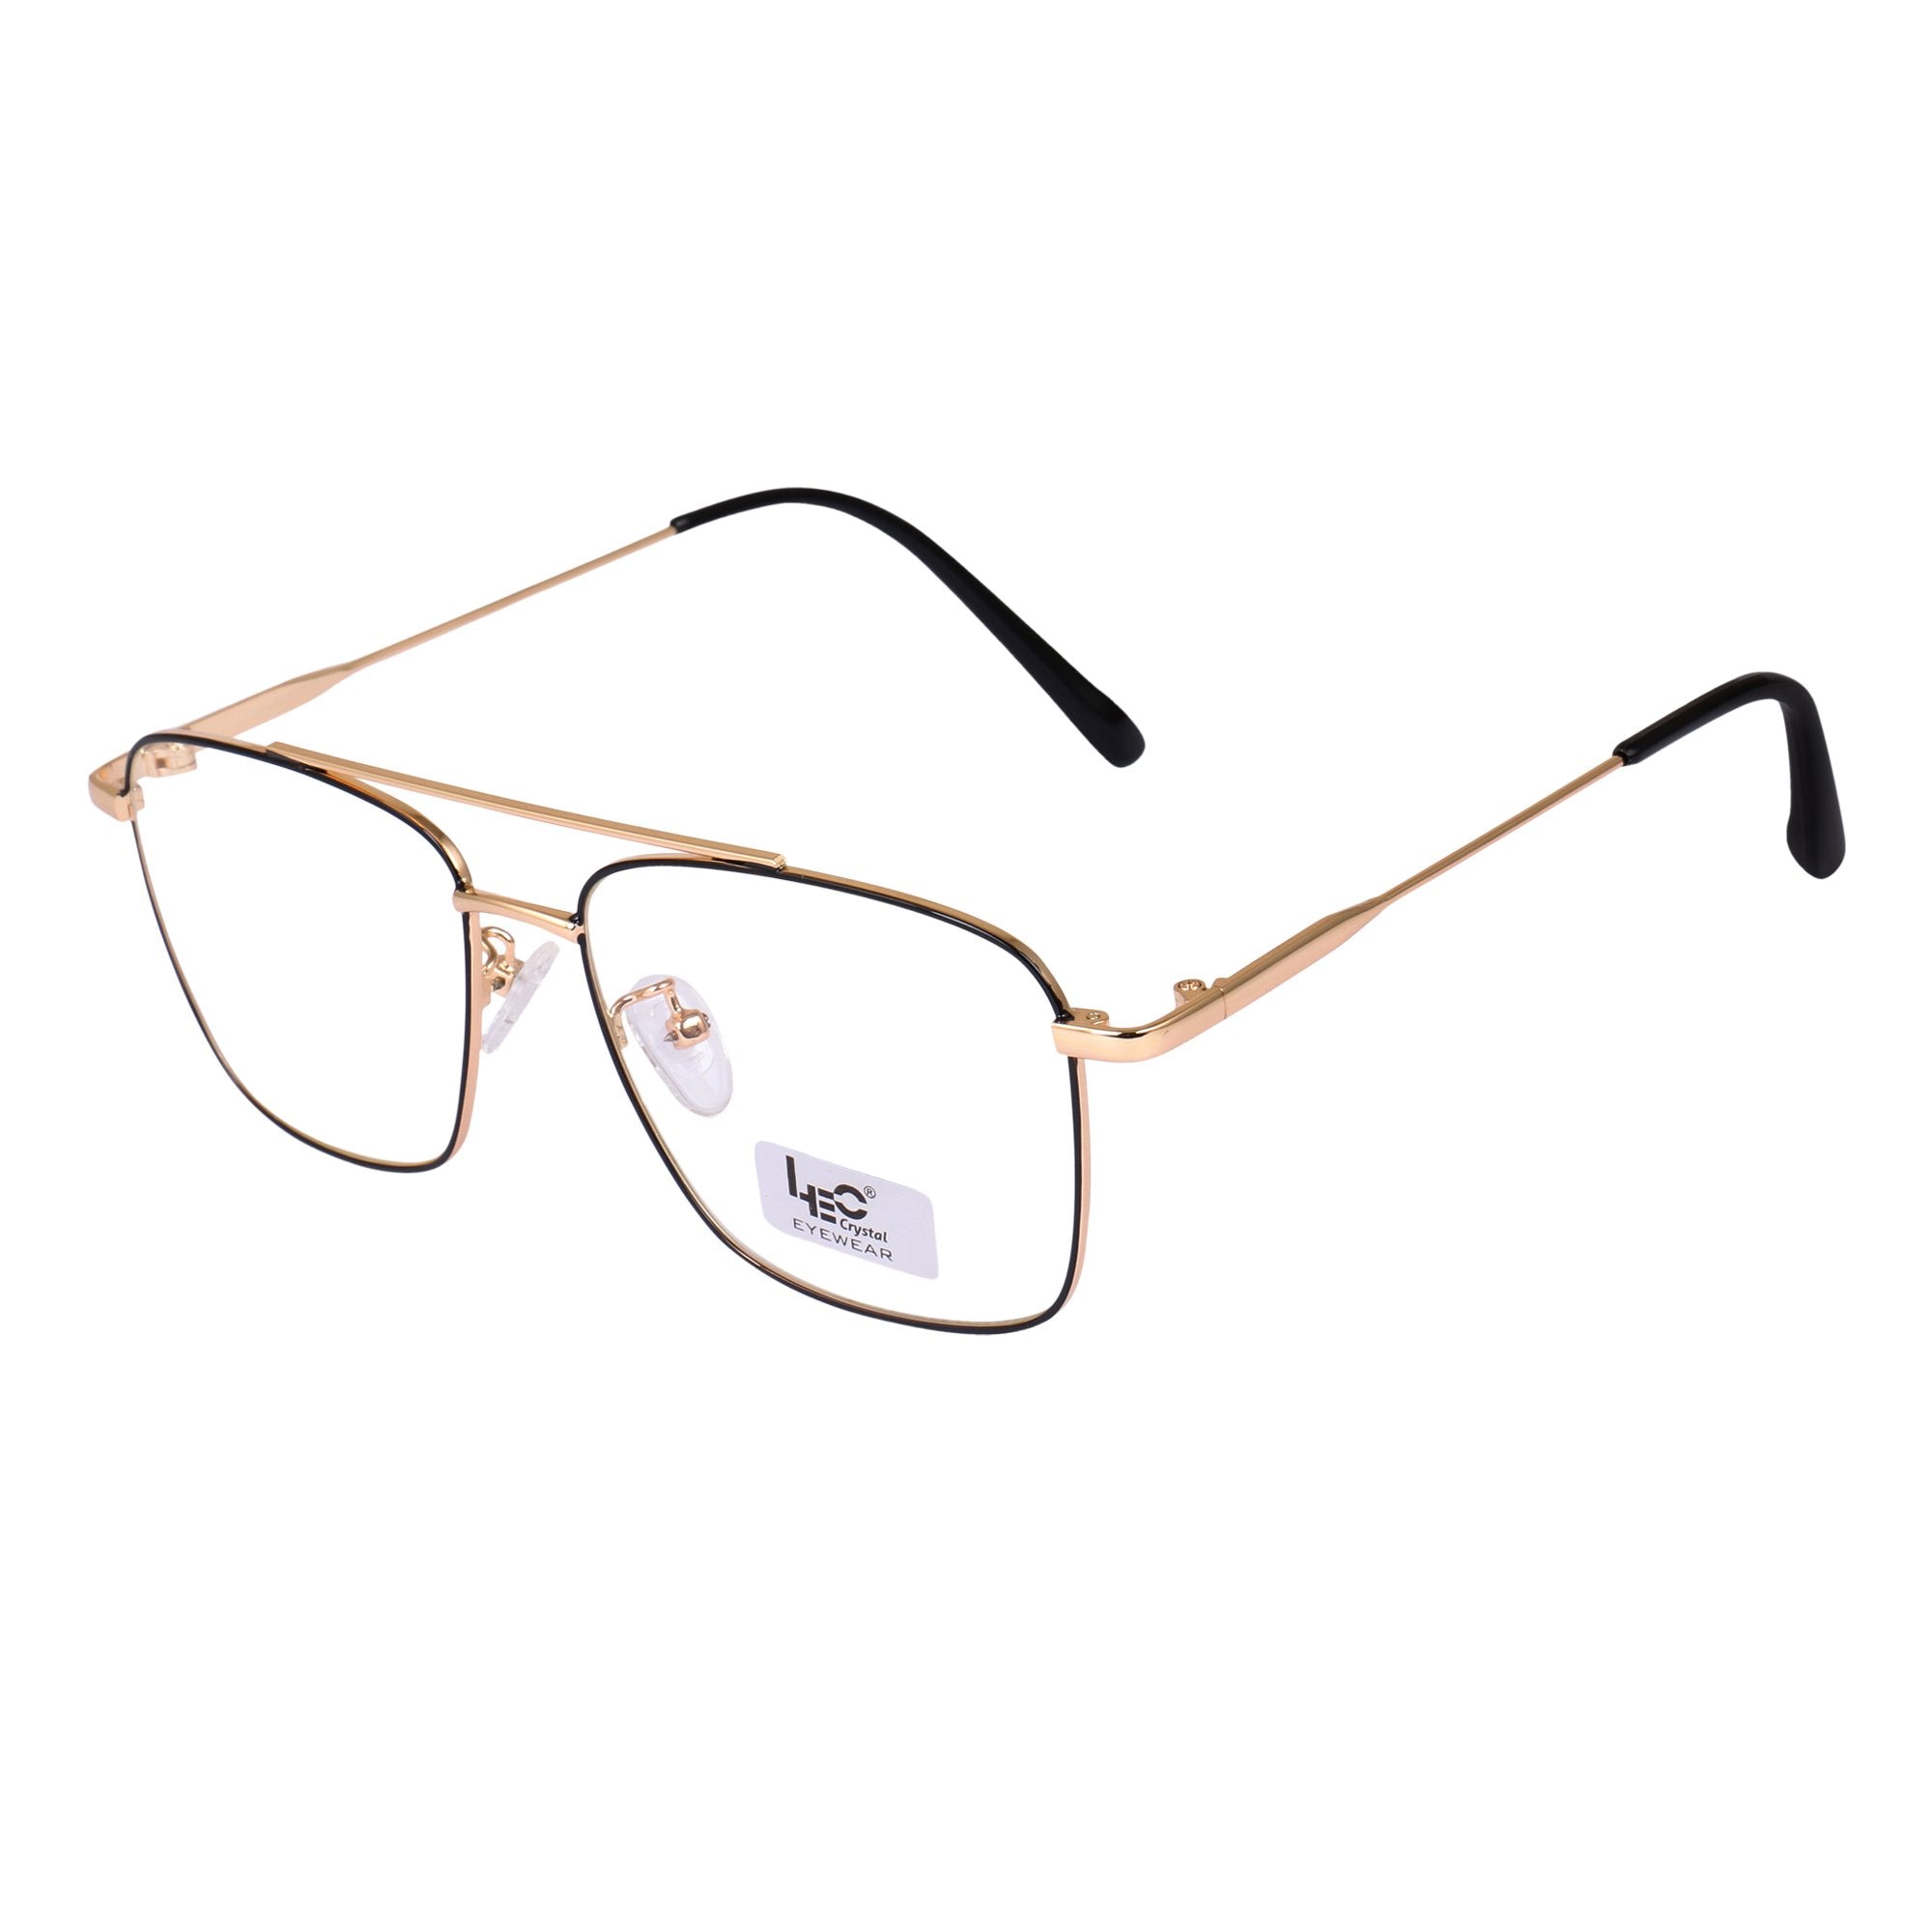 Black & Gold Square Metal Eyeglasses - L3076